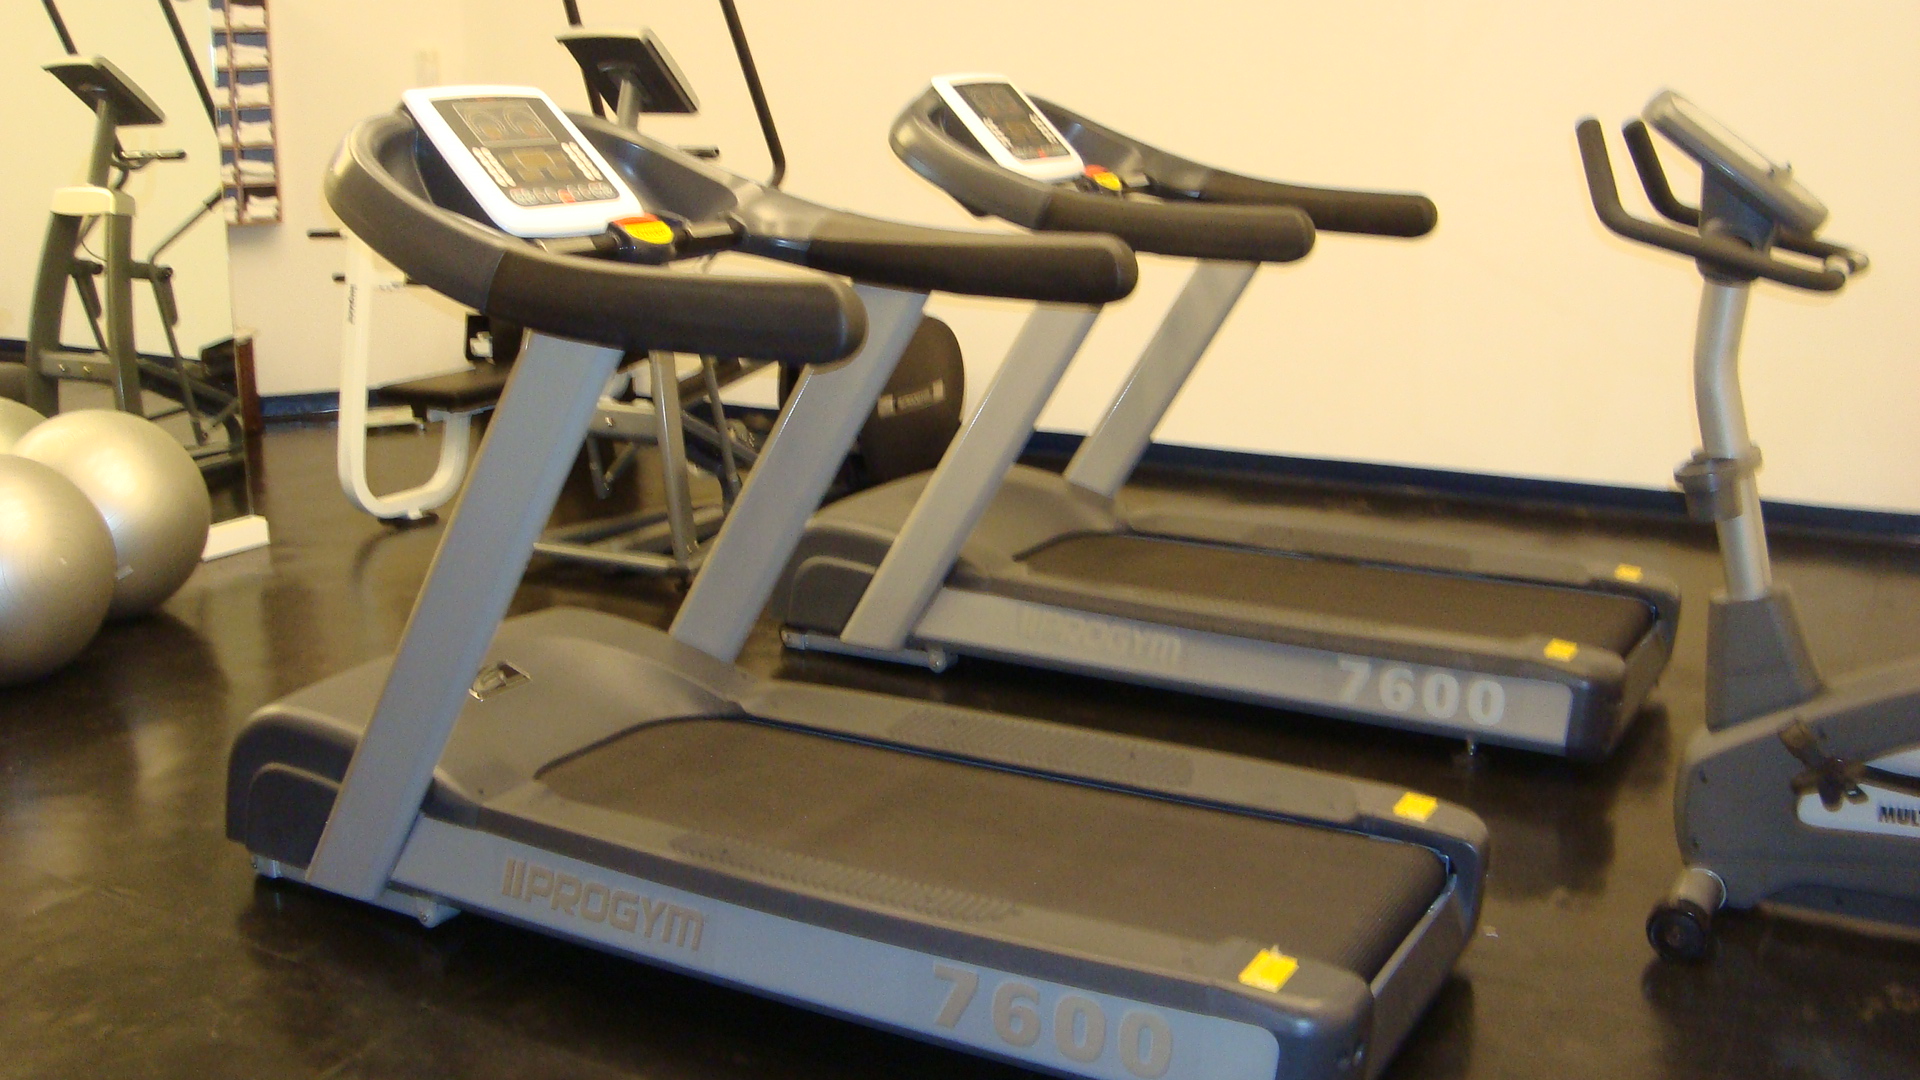 Treadmill by itself